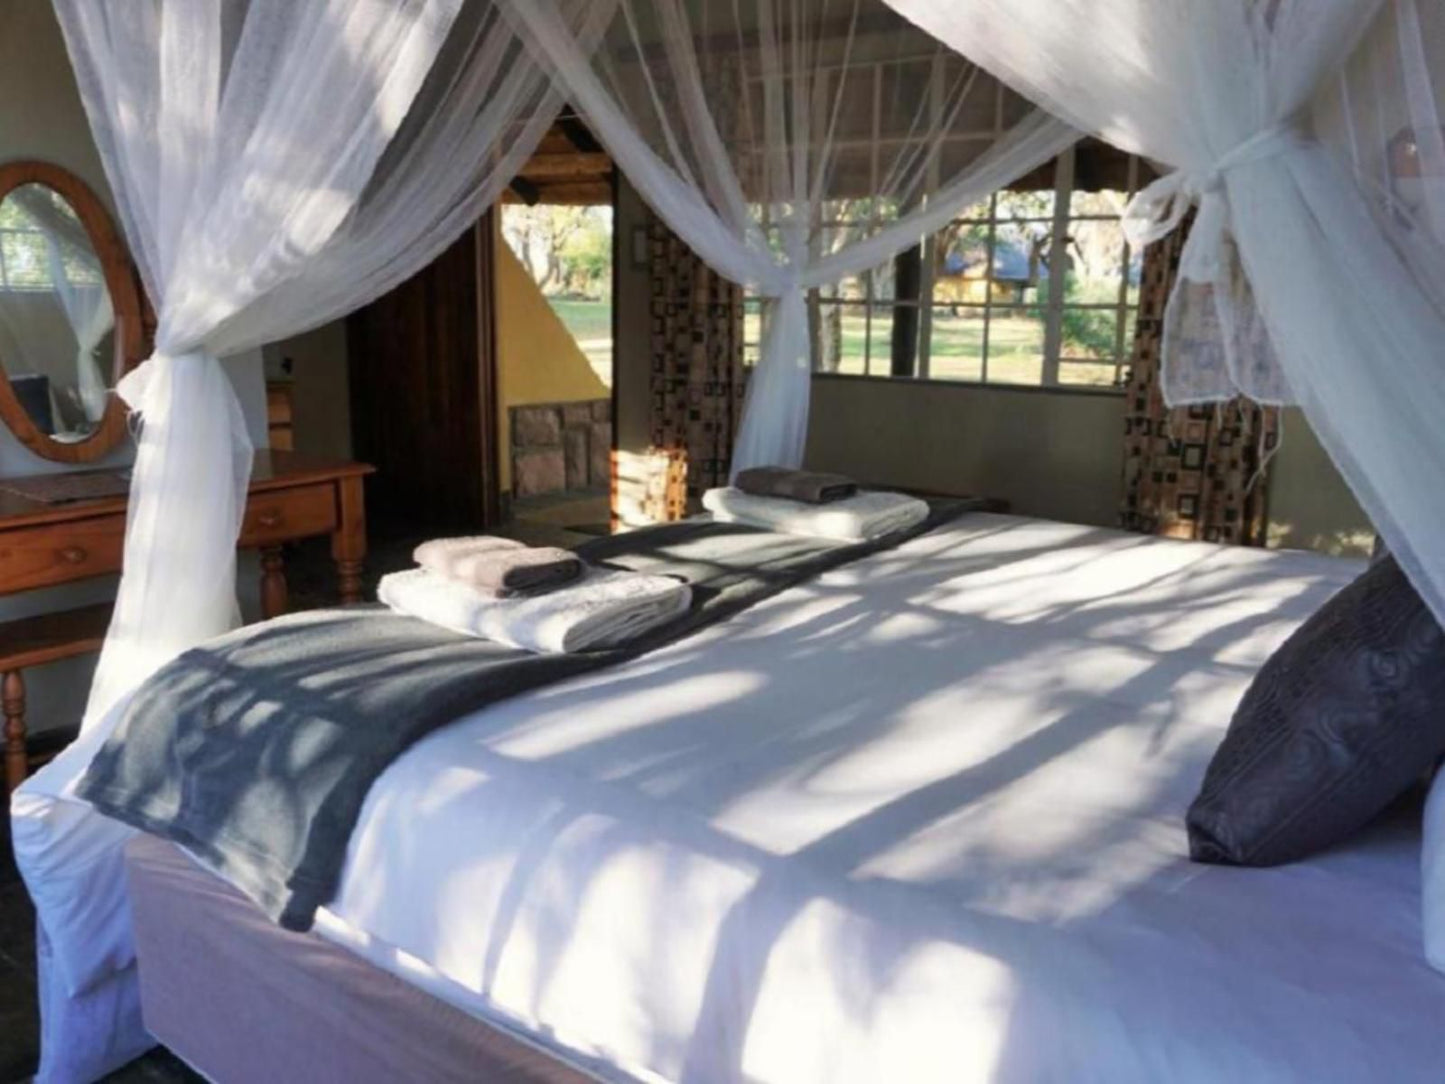 Kum Kula Lodge Kapama Reserve Mpumalanga South Africa Tent, Architecture, Bedroom